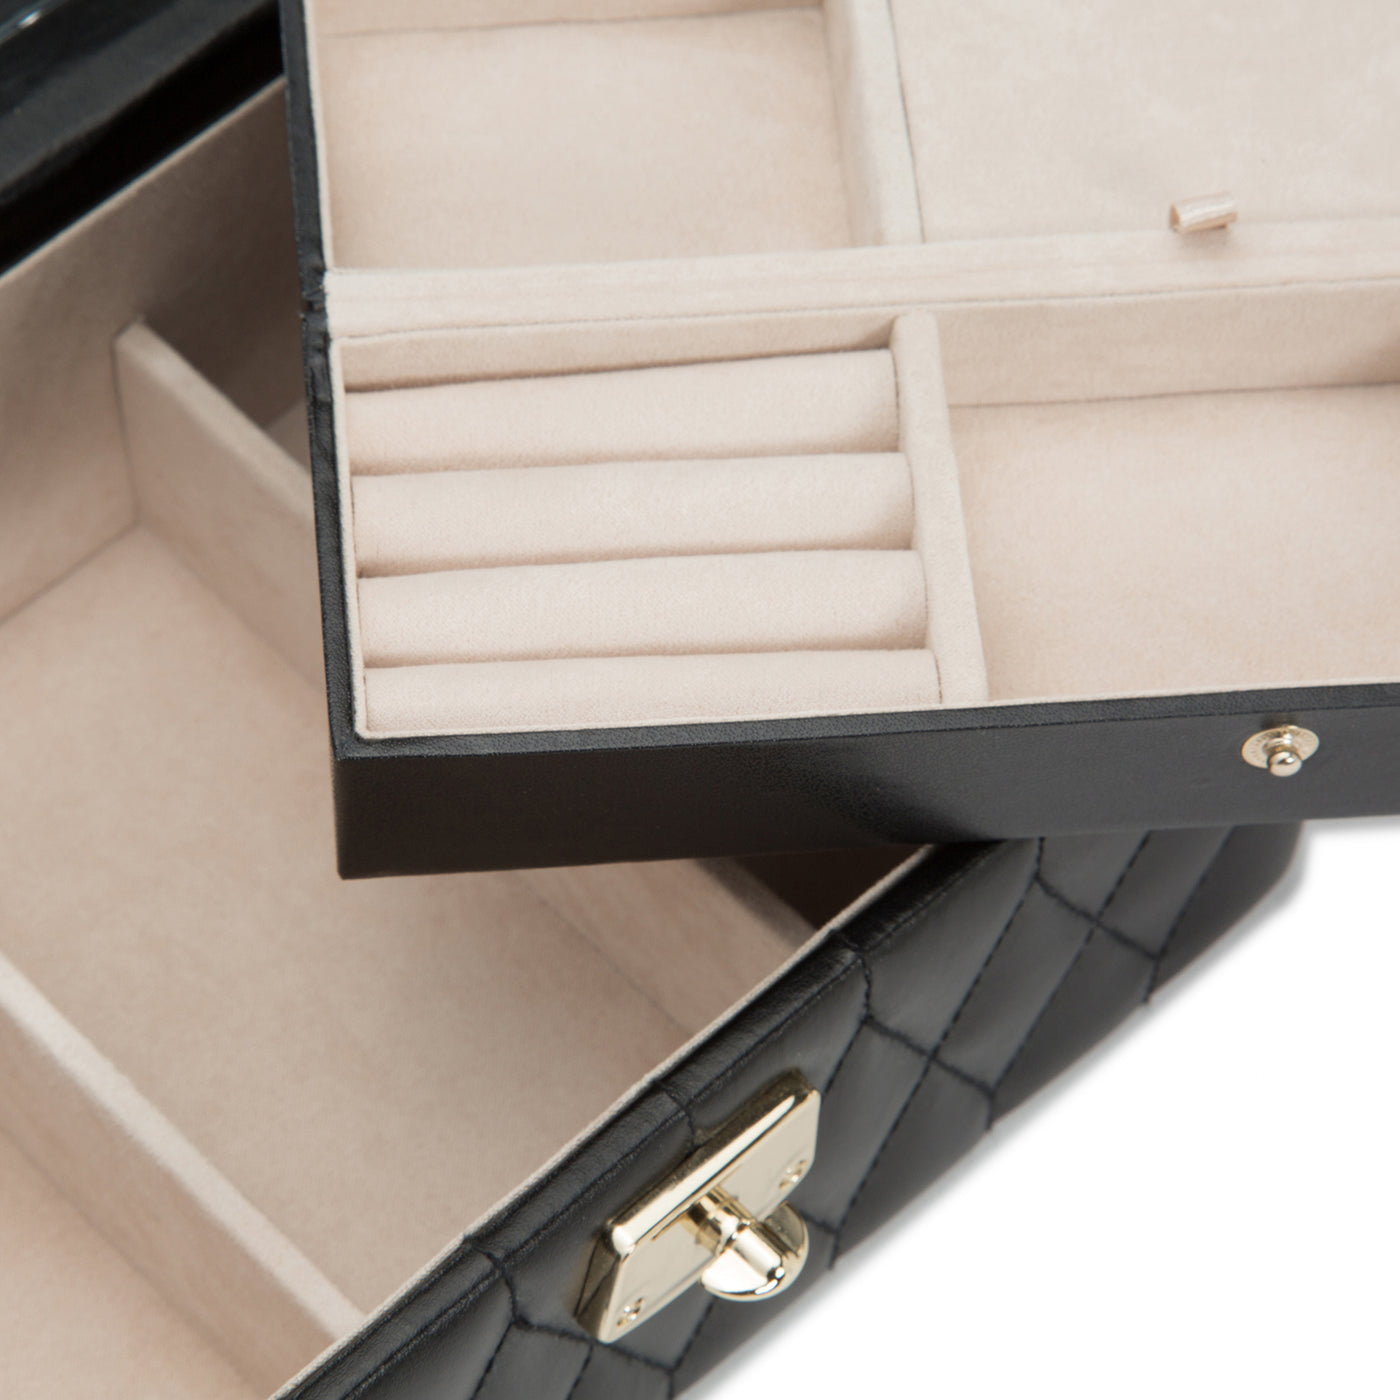 Caroline Small Jewelry Case (Black) - Lauren Sigman Collection